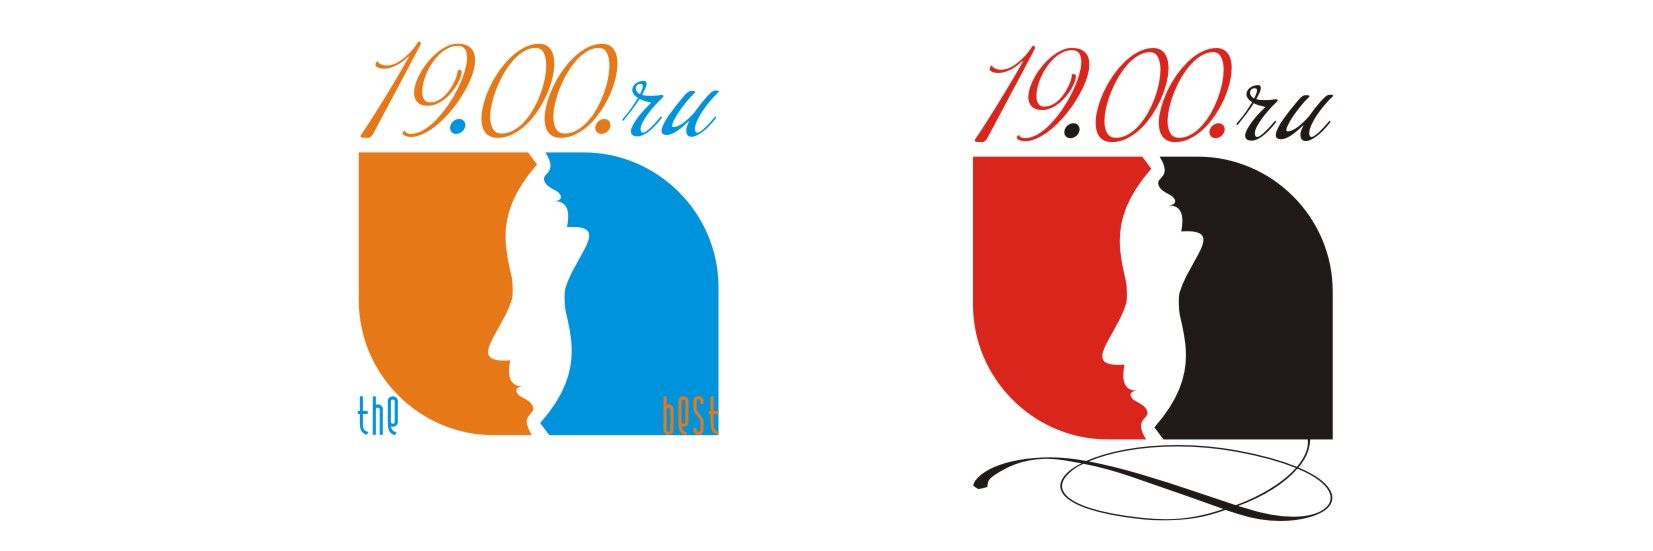 Логотип 19-00.RU - дизайнер DINA